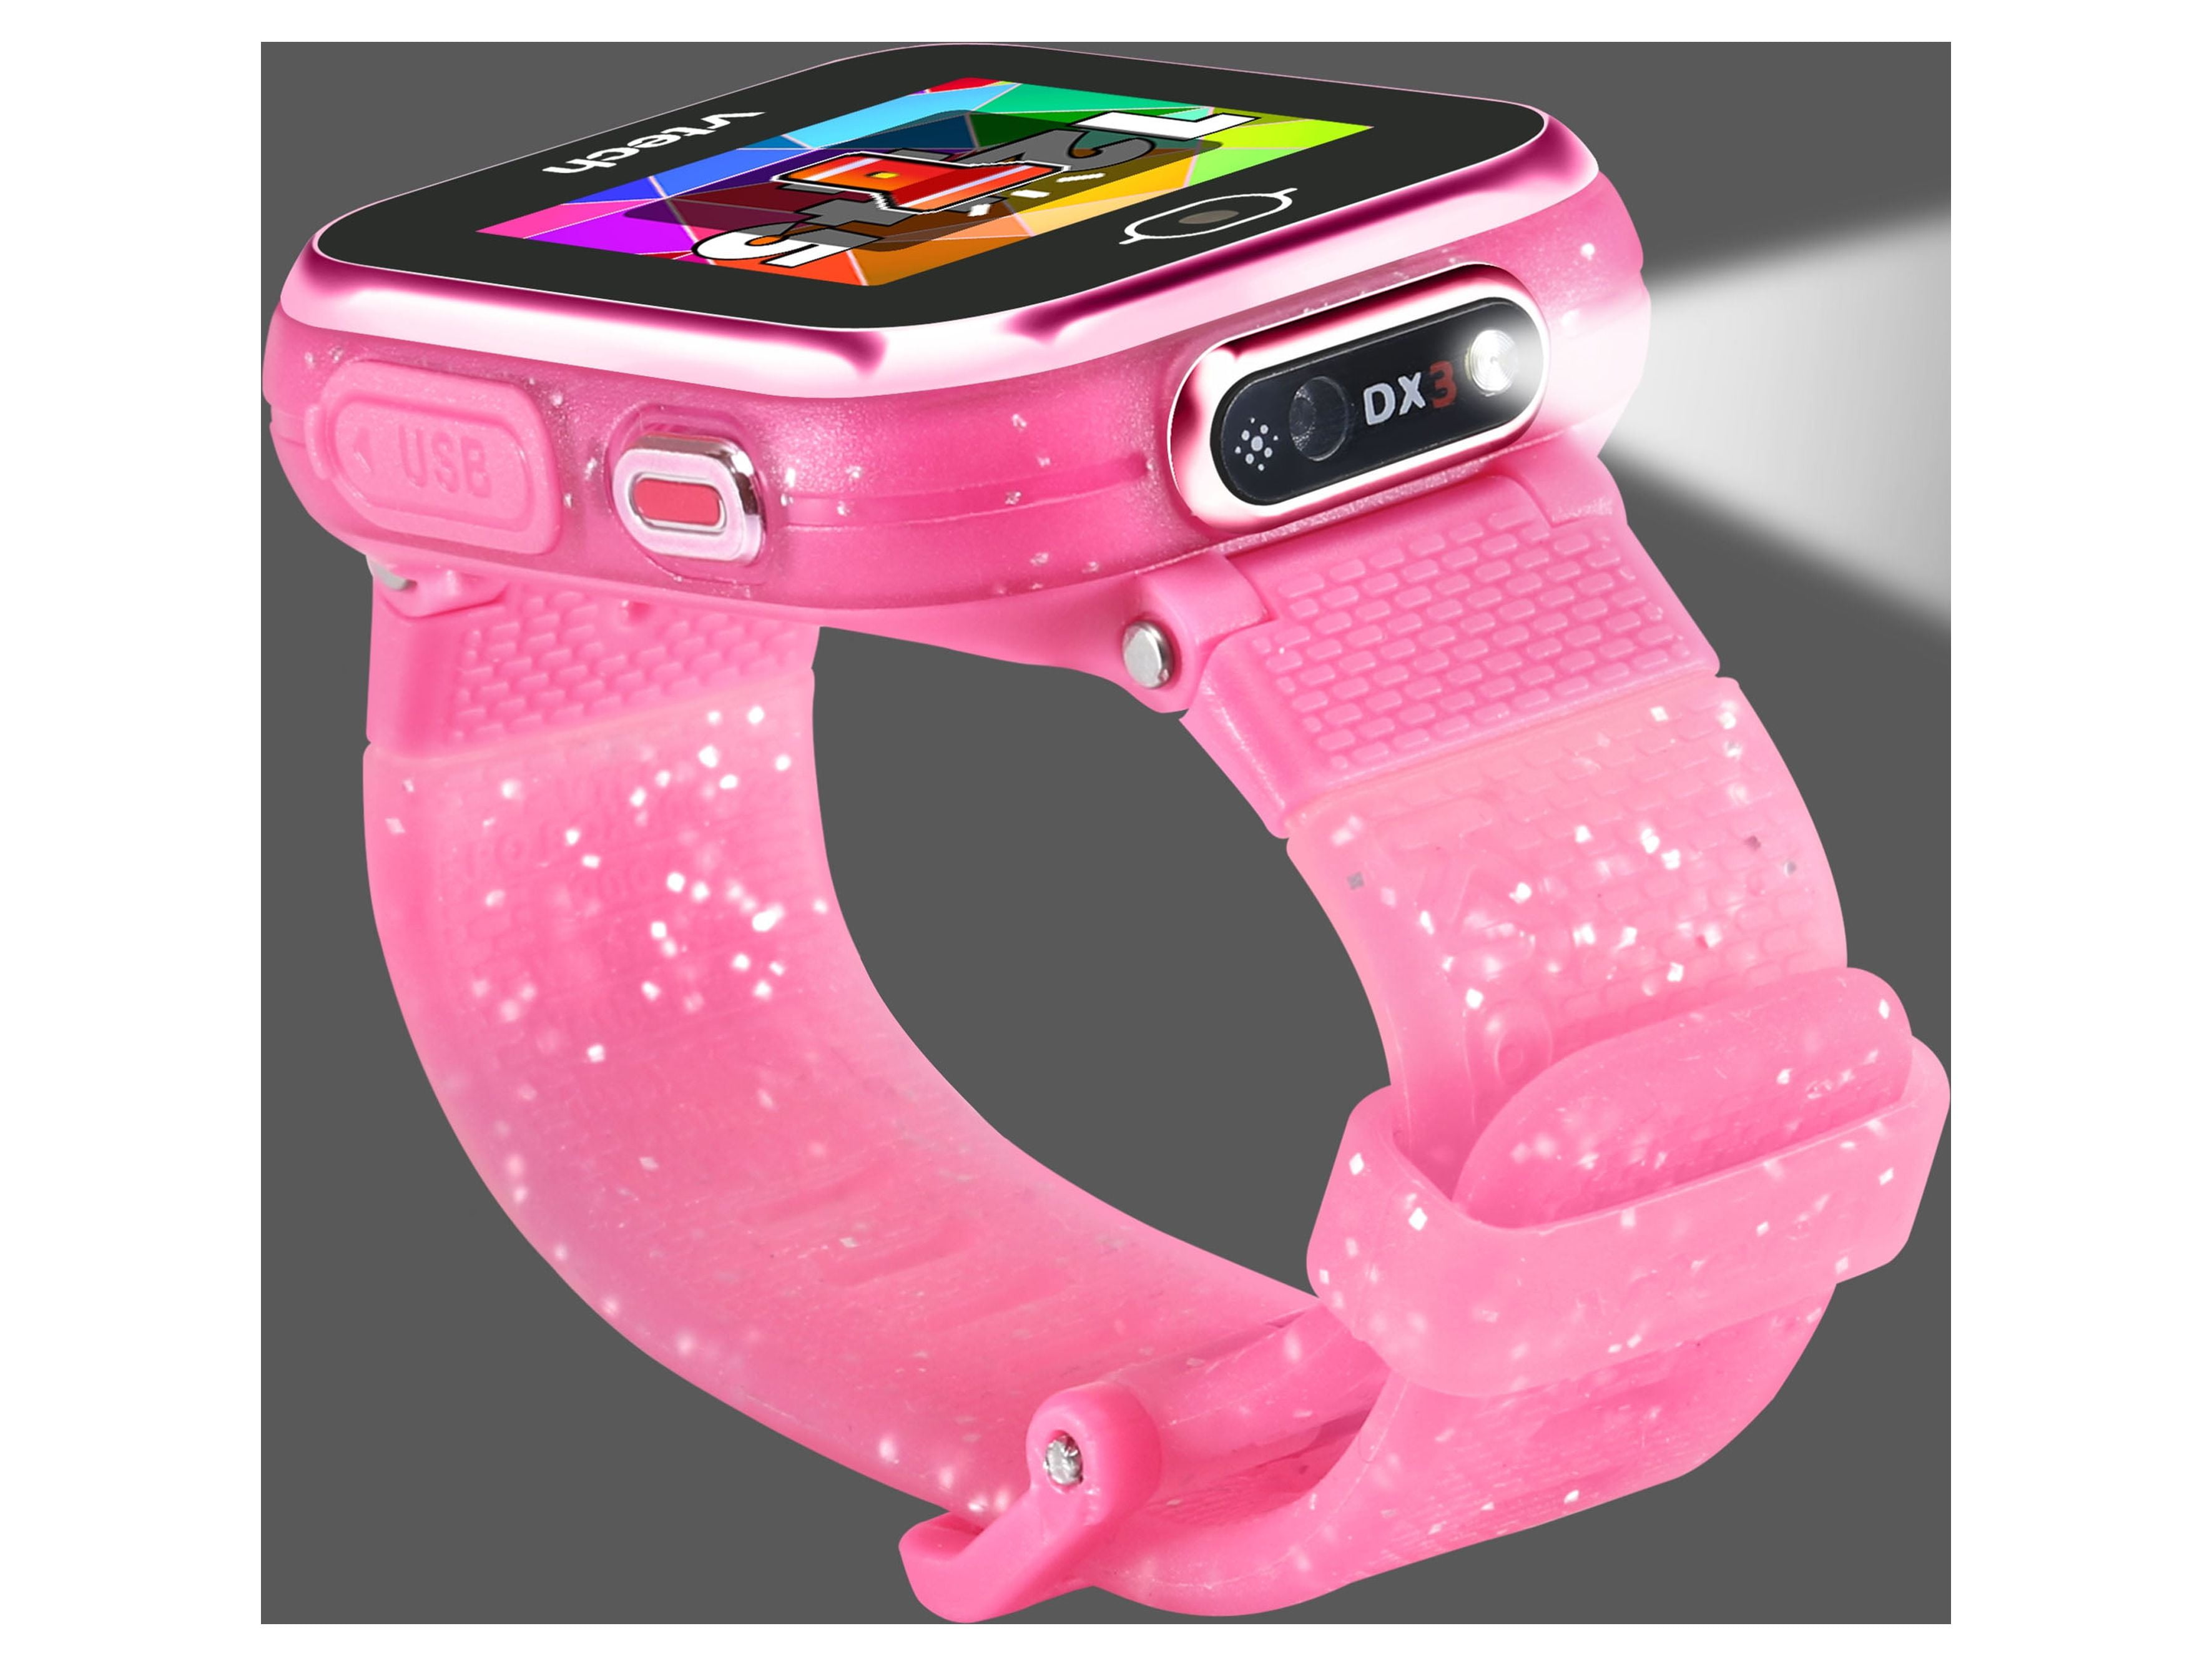 Vtech Kidizoom Max Smartwatch Pink